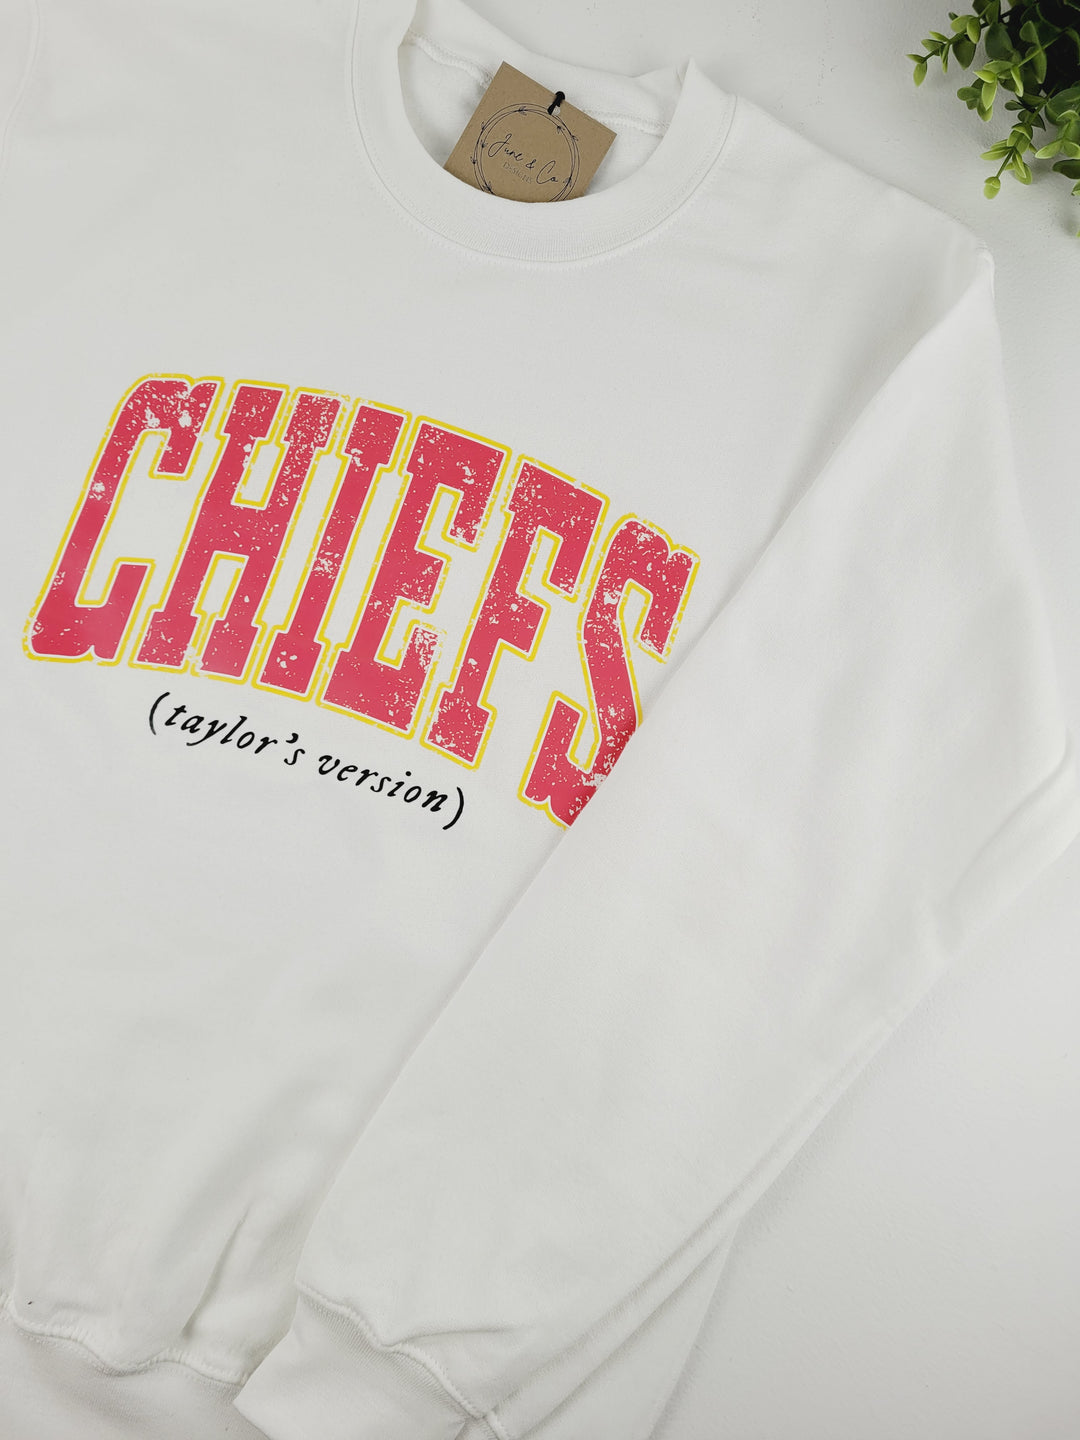 June & Co Designs, Chiefs Taylor's Version Crewneck Sweaters